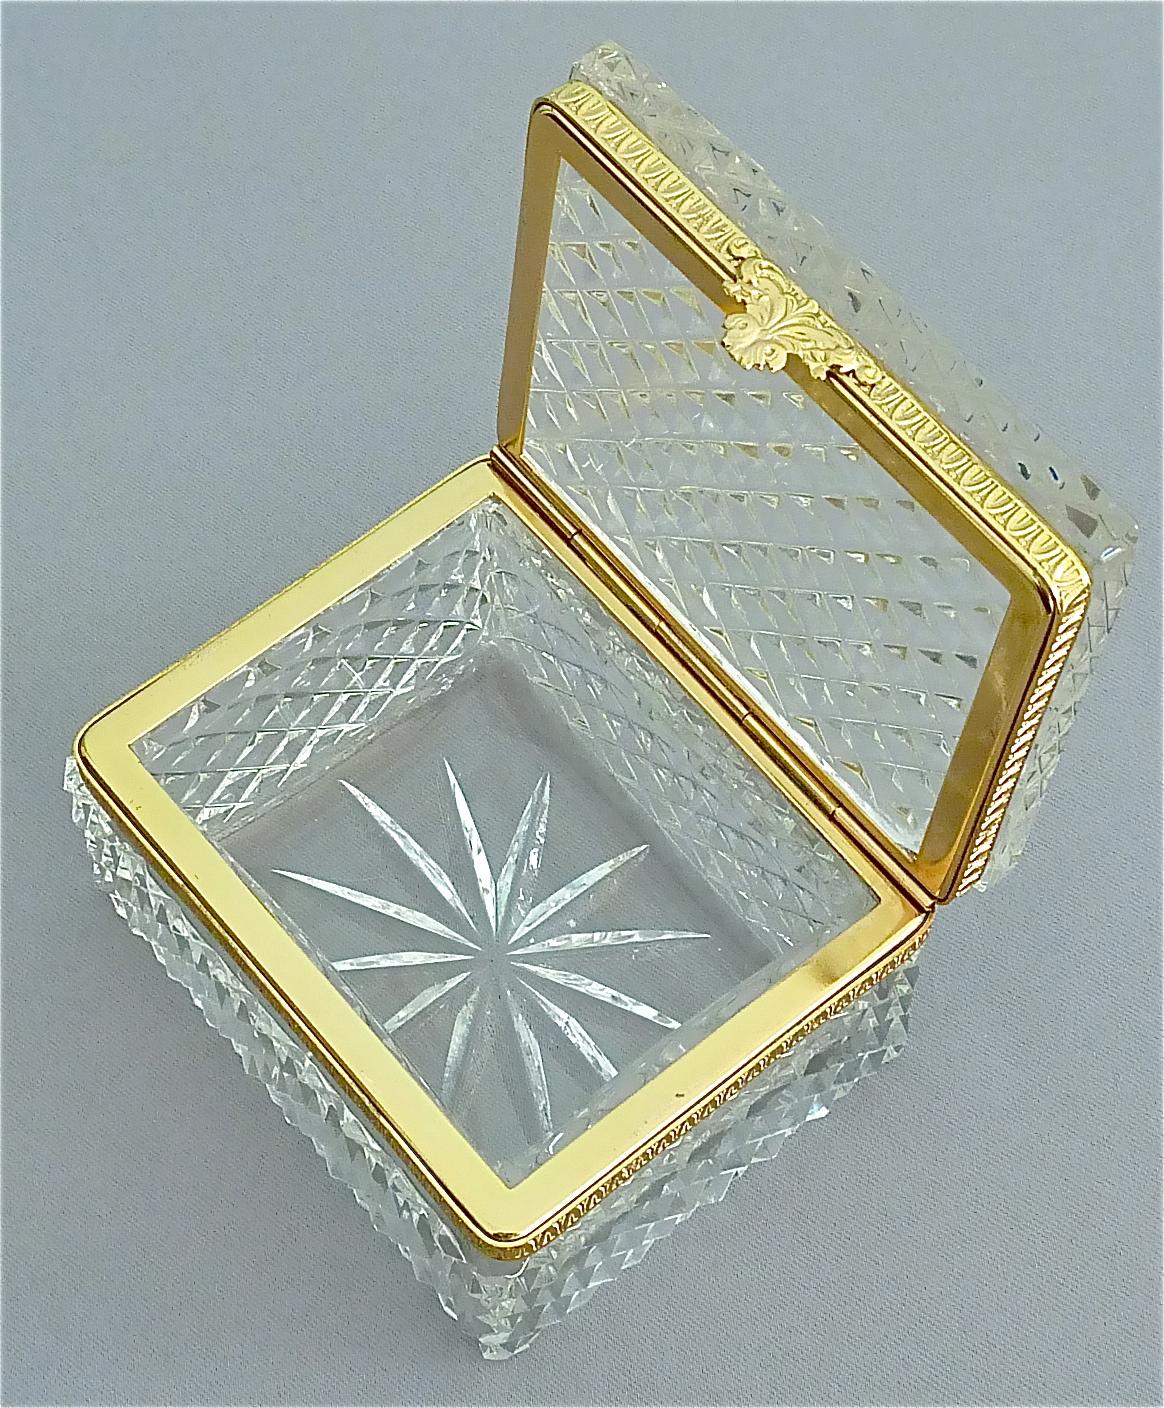 French Rare 1950s Baccarat Crystal Glass Smoking Set Gilt Brass Ashtray Box Lighter